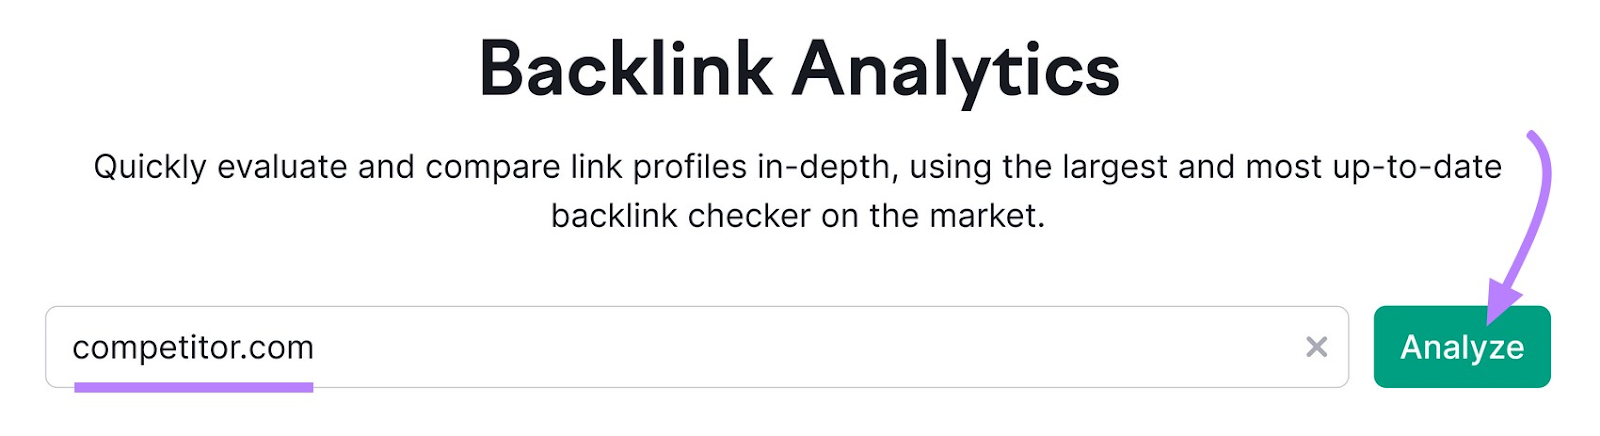 Semrush’s Backlink Analytics tool